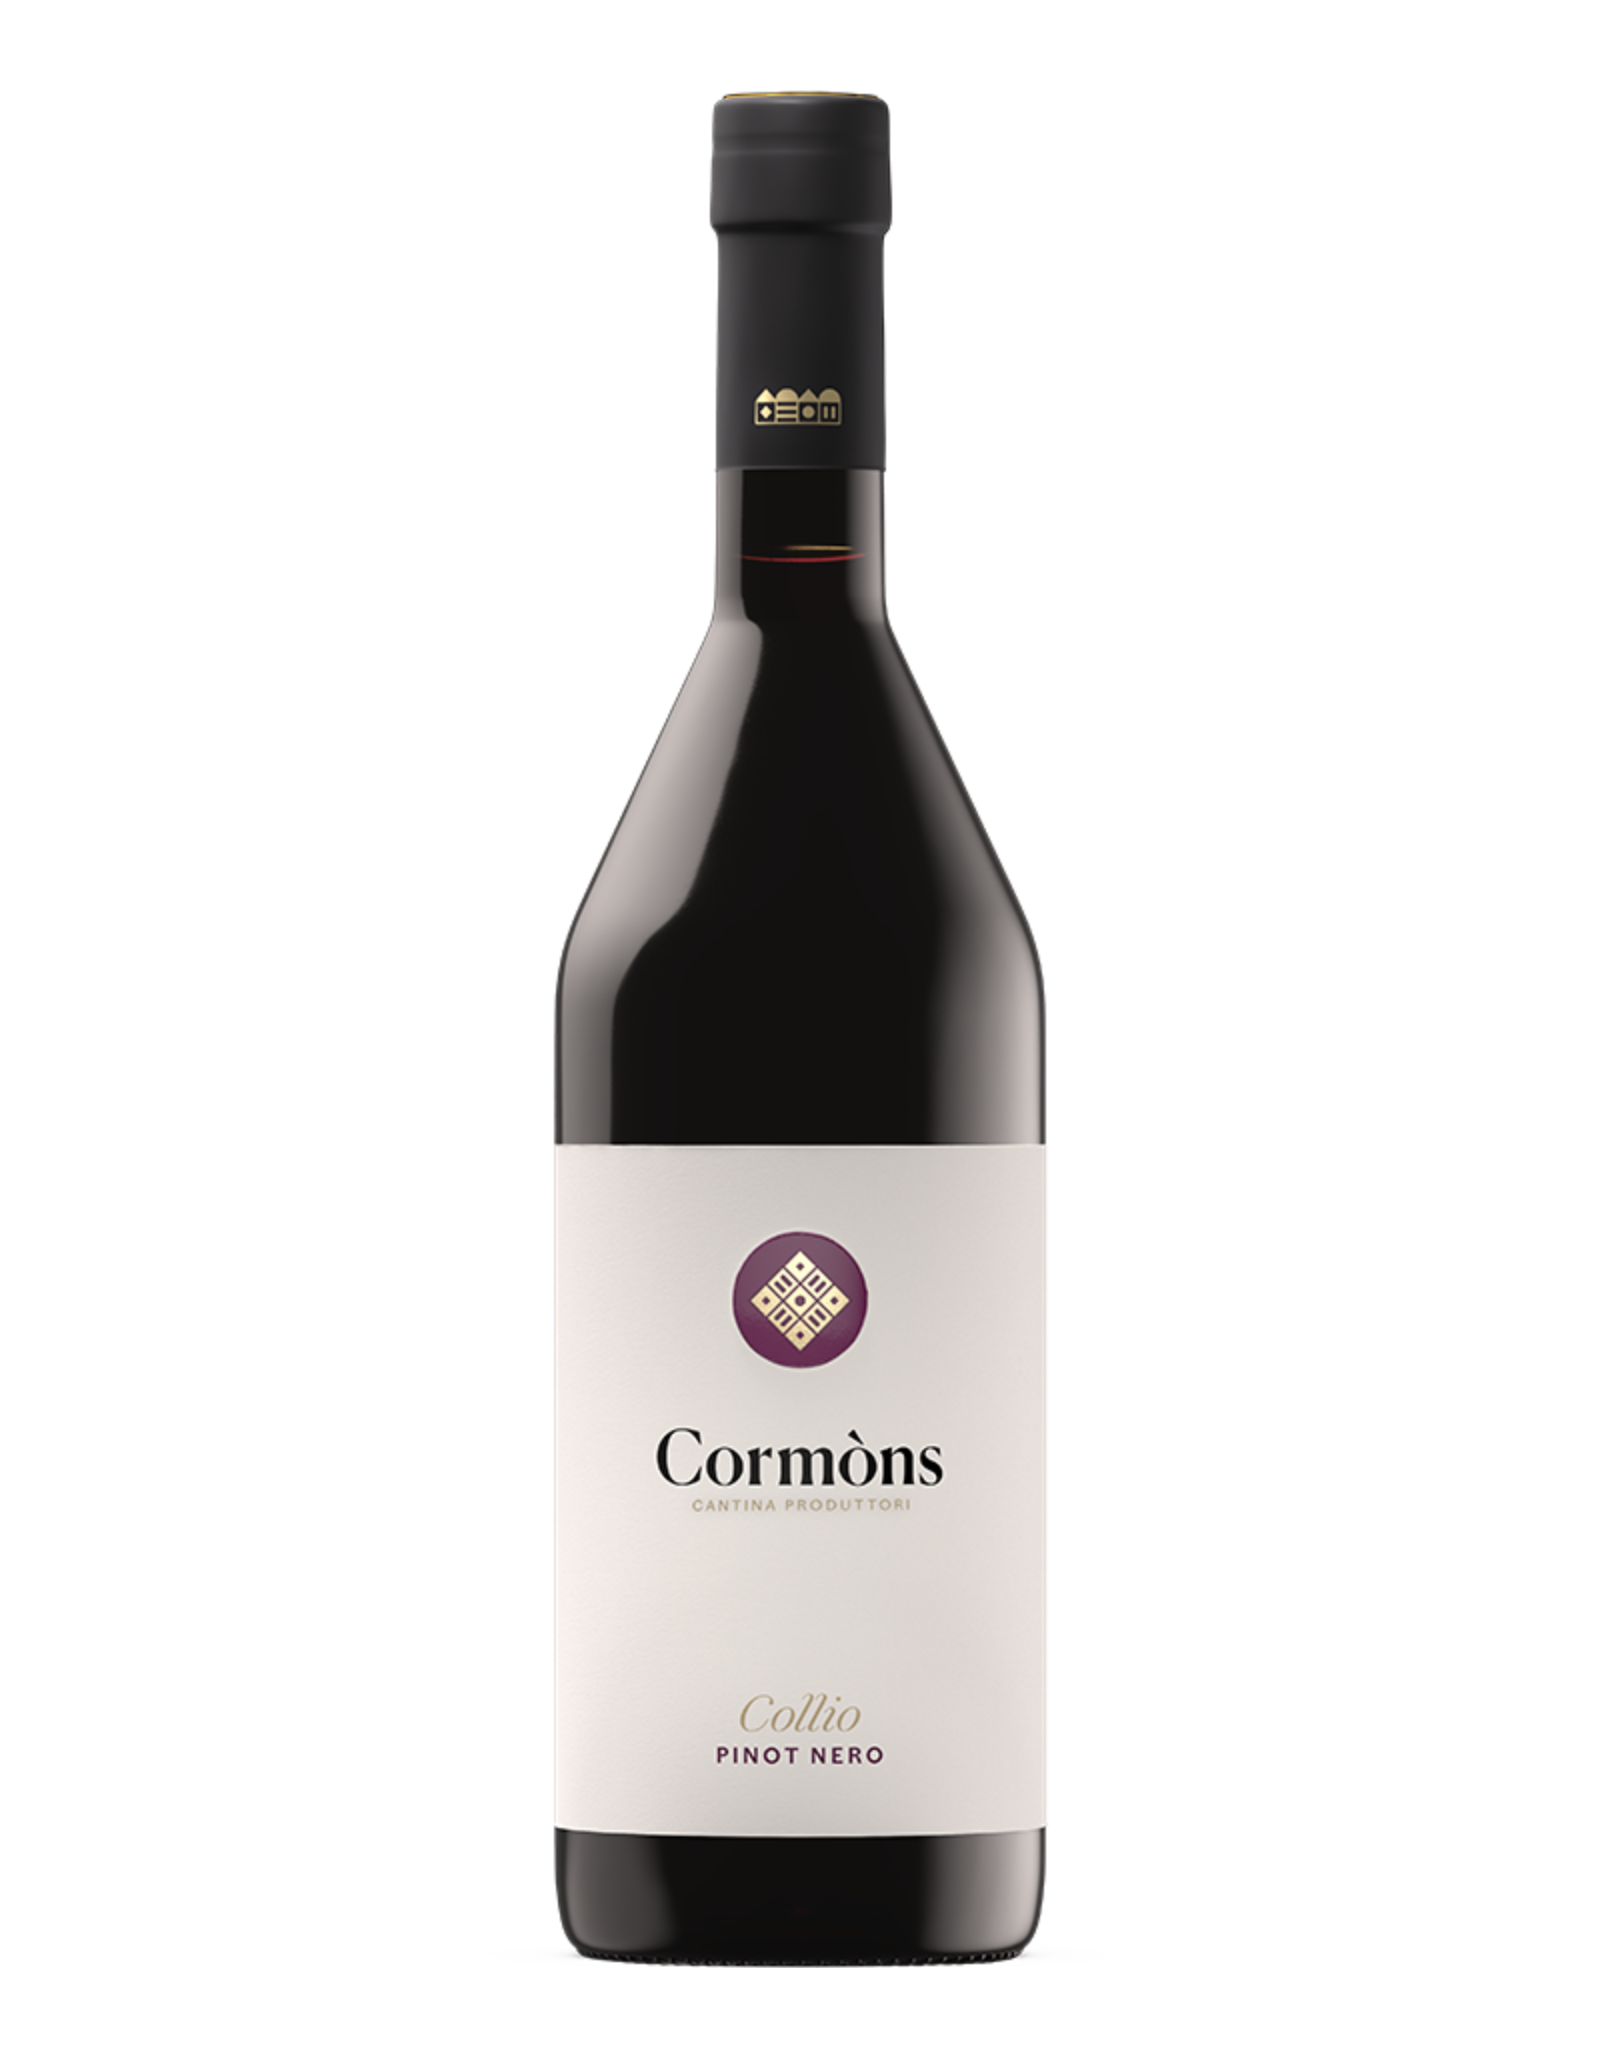 Cormòns Cantina Cormòns DOC Collio Pinot Nero 2018 & 2019